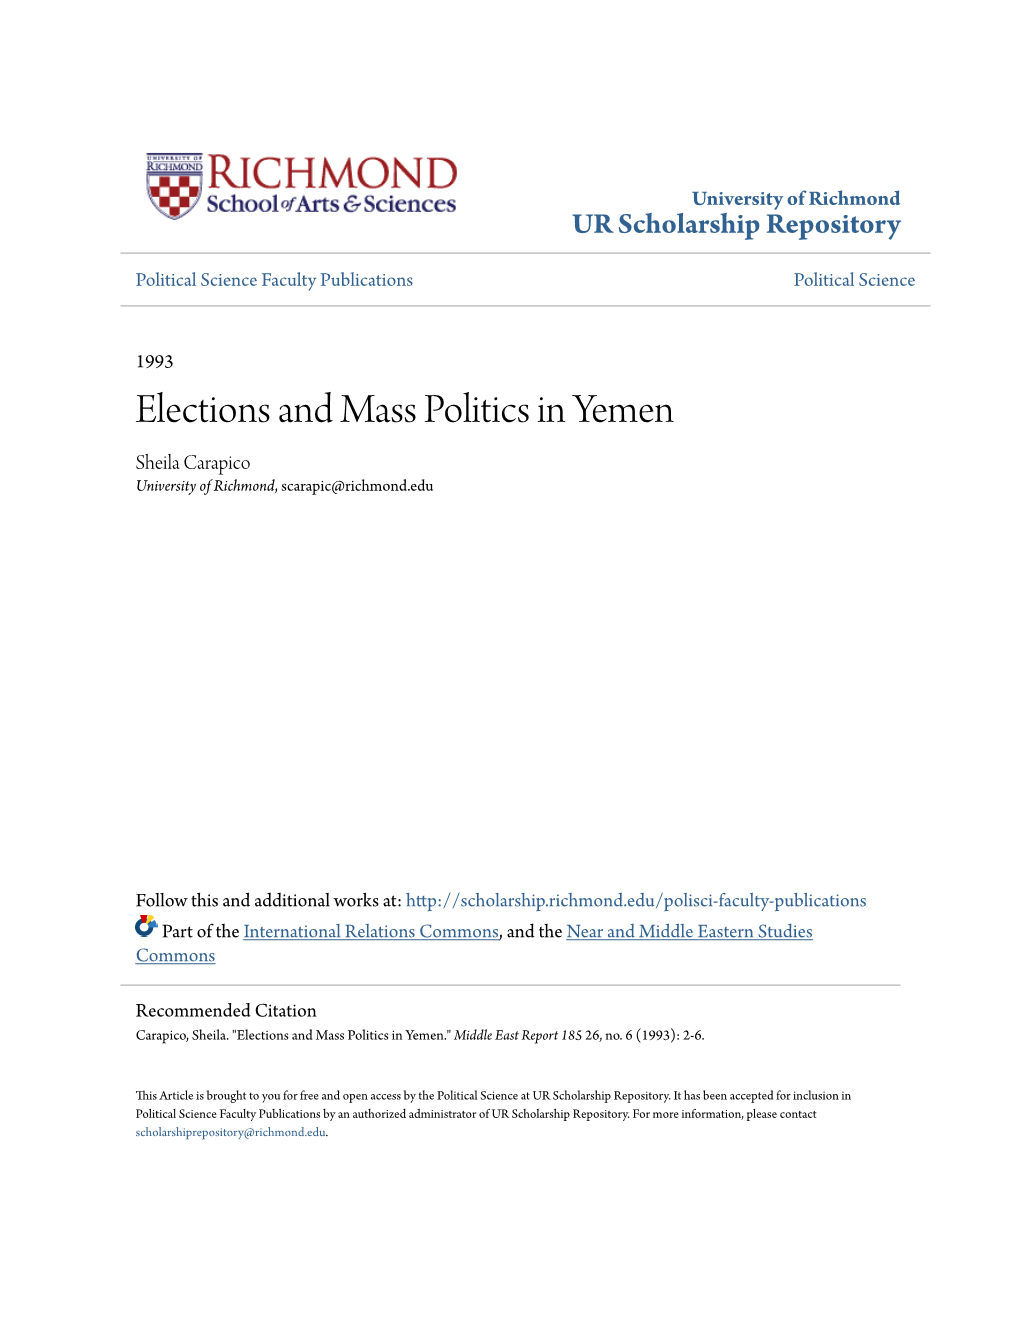 Elections and Mass Politics in Yemen Sheila Carapico University of Richmond, Scarapic@Richmond.Edu